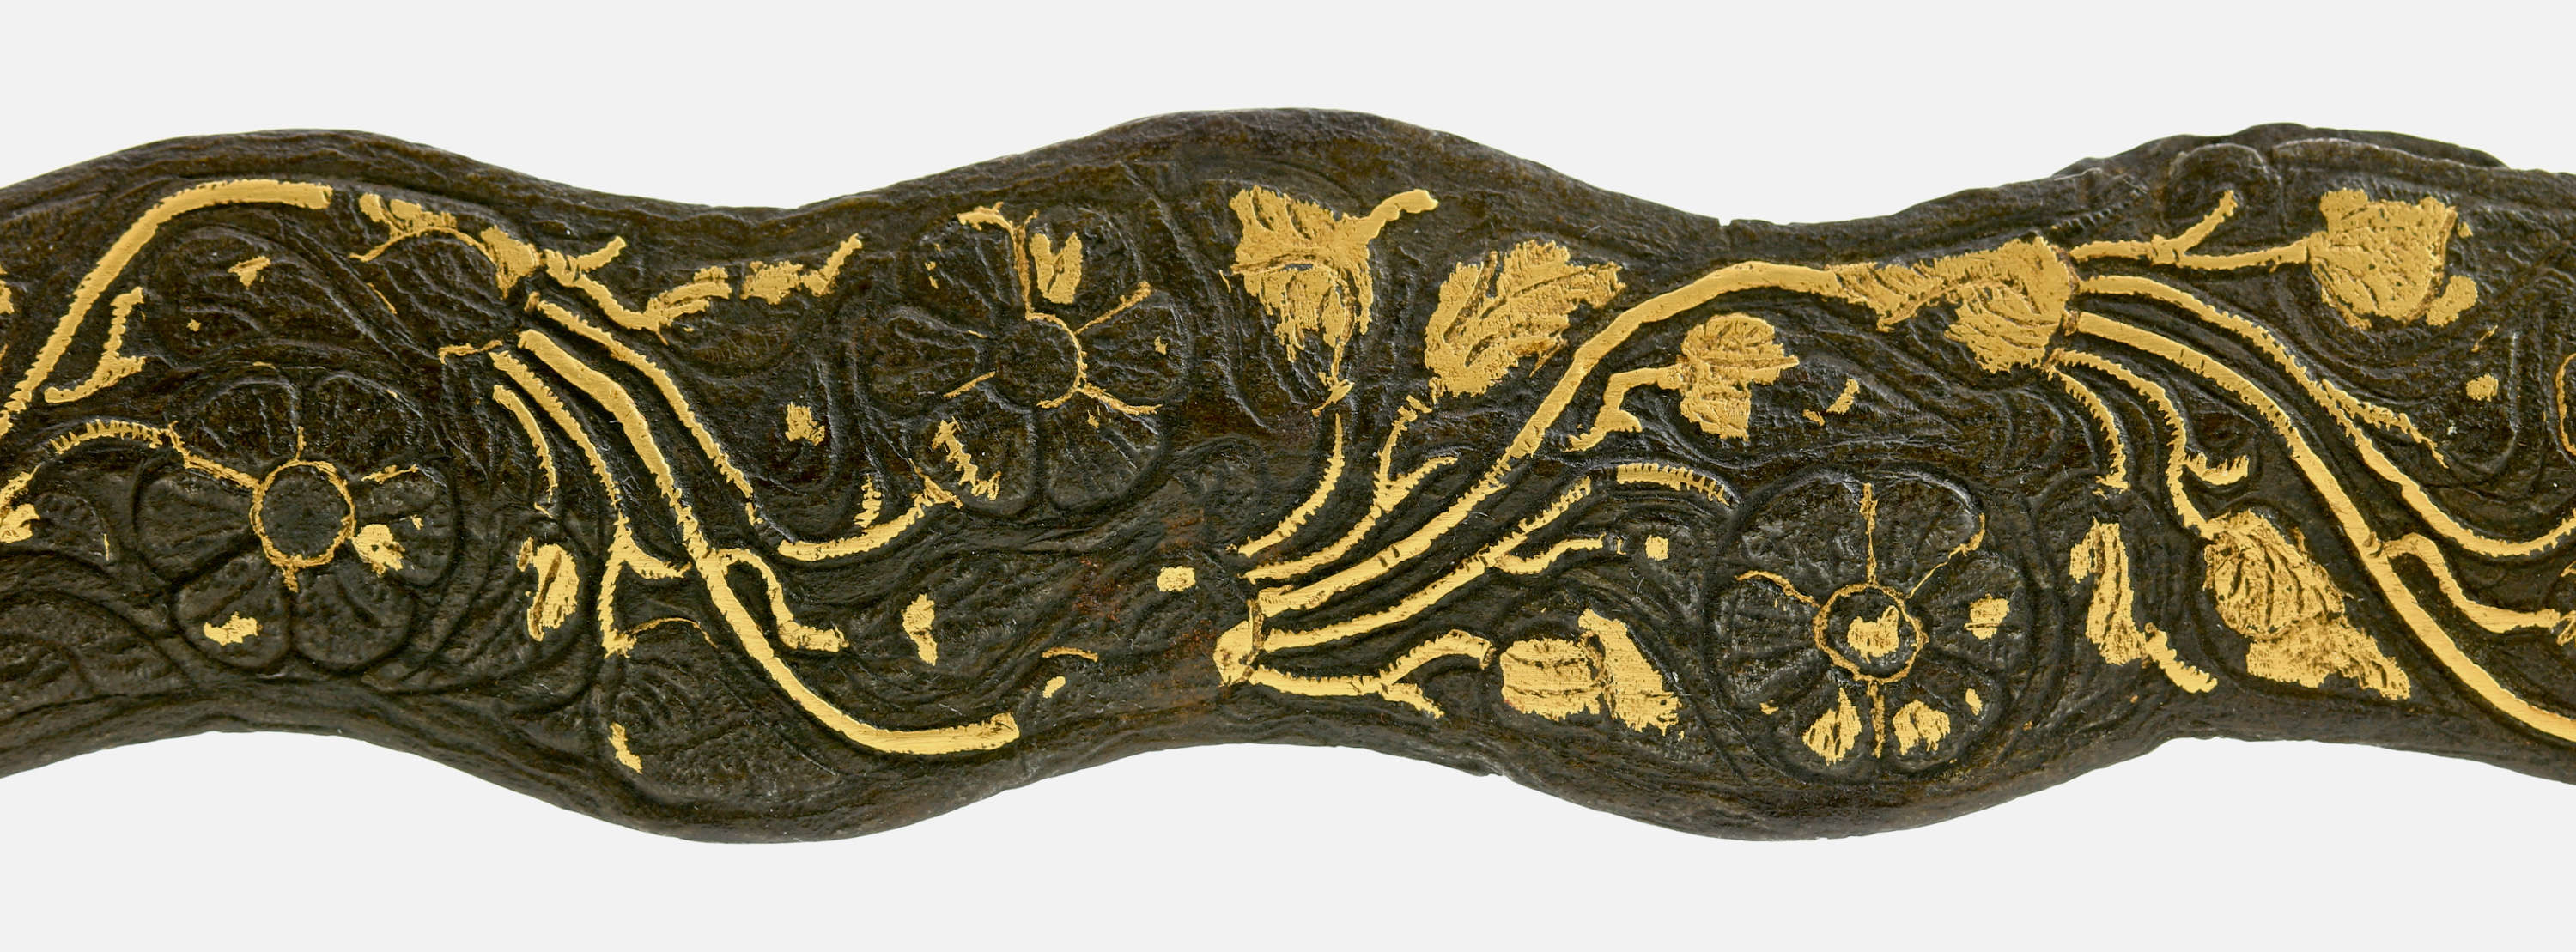 17th century Javanese spearhead